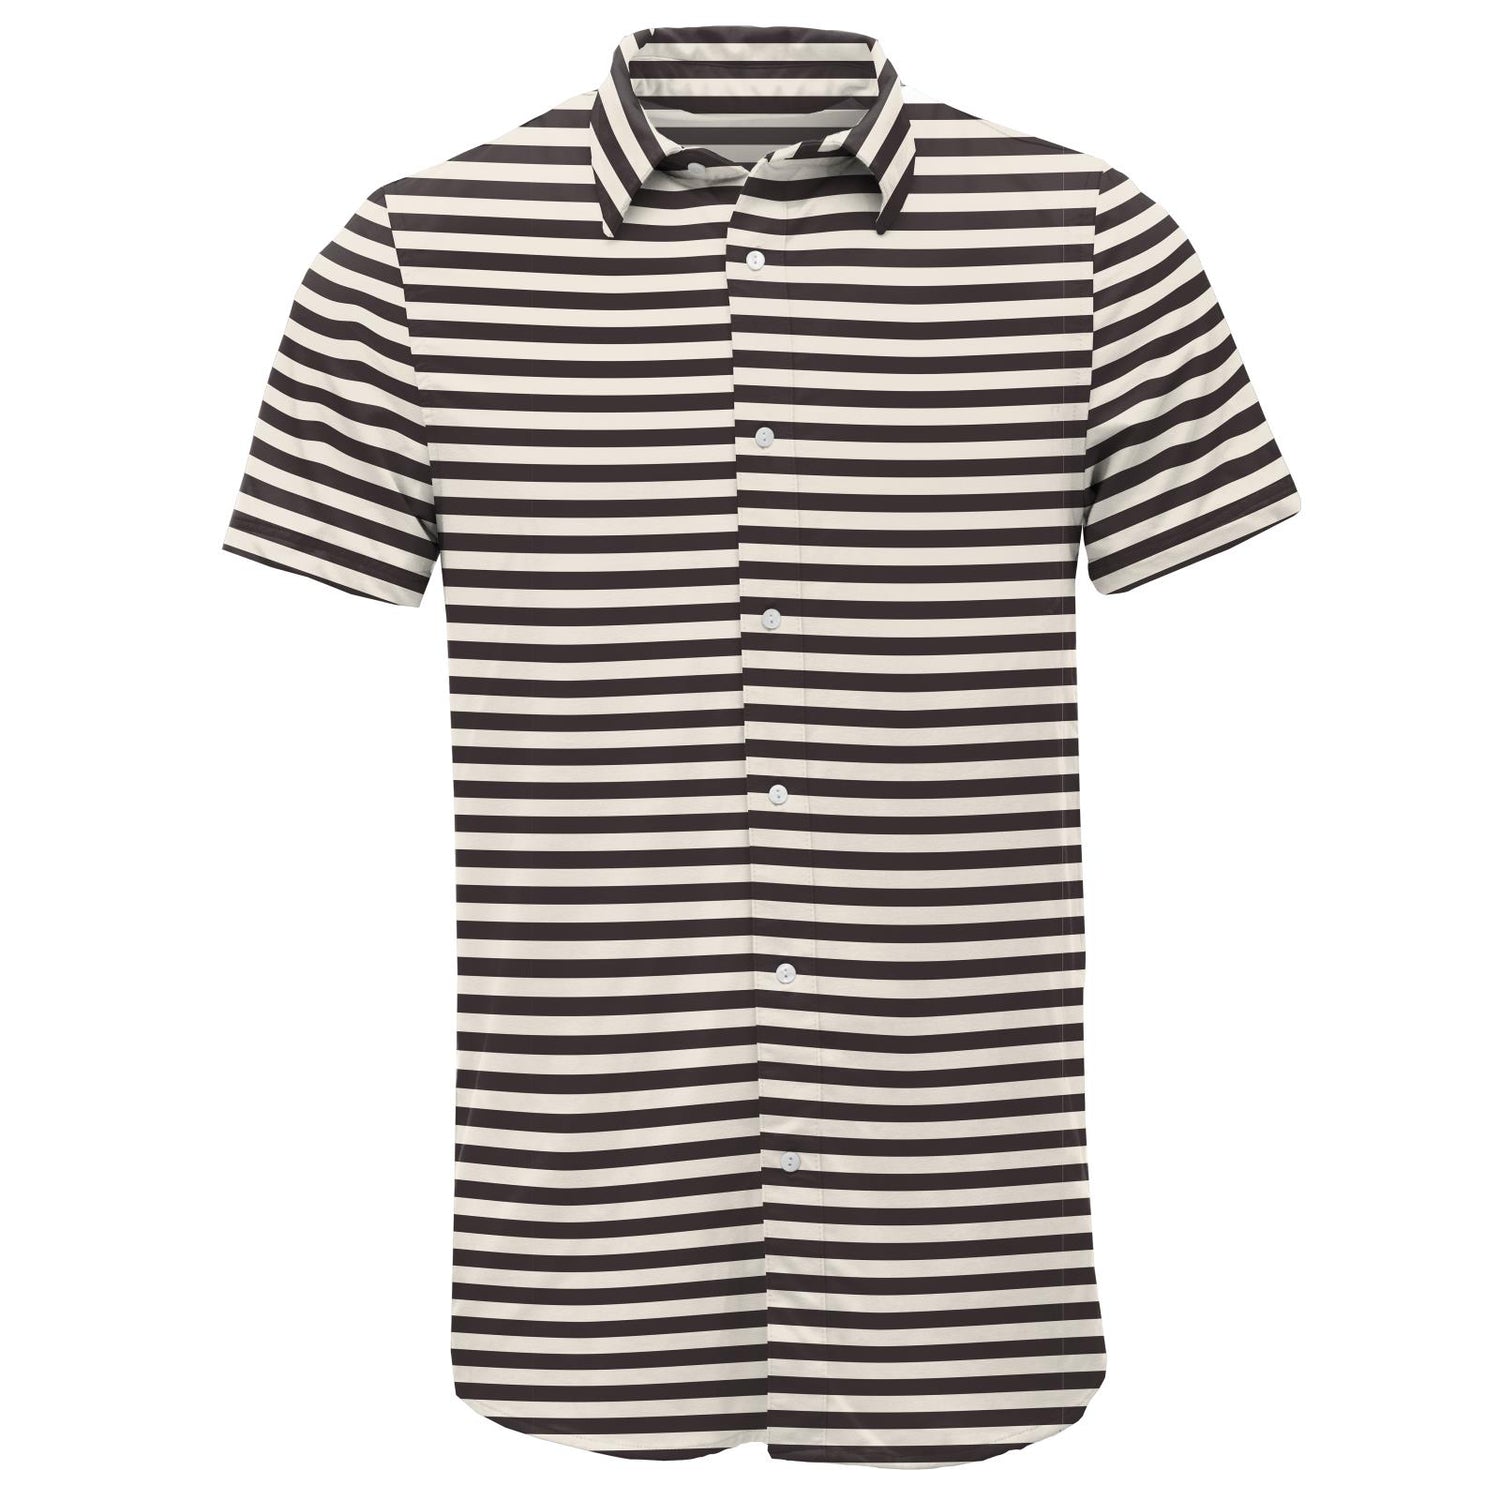 Men's Print Short Sleeve Button Down Shirt in Jailhouse Rock Stripe